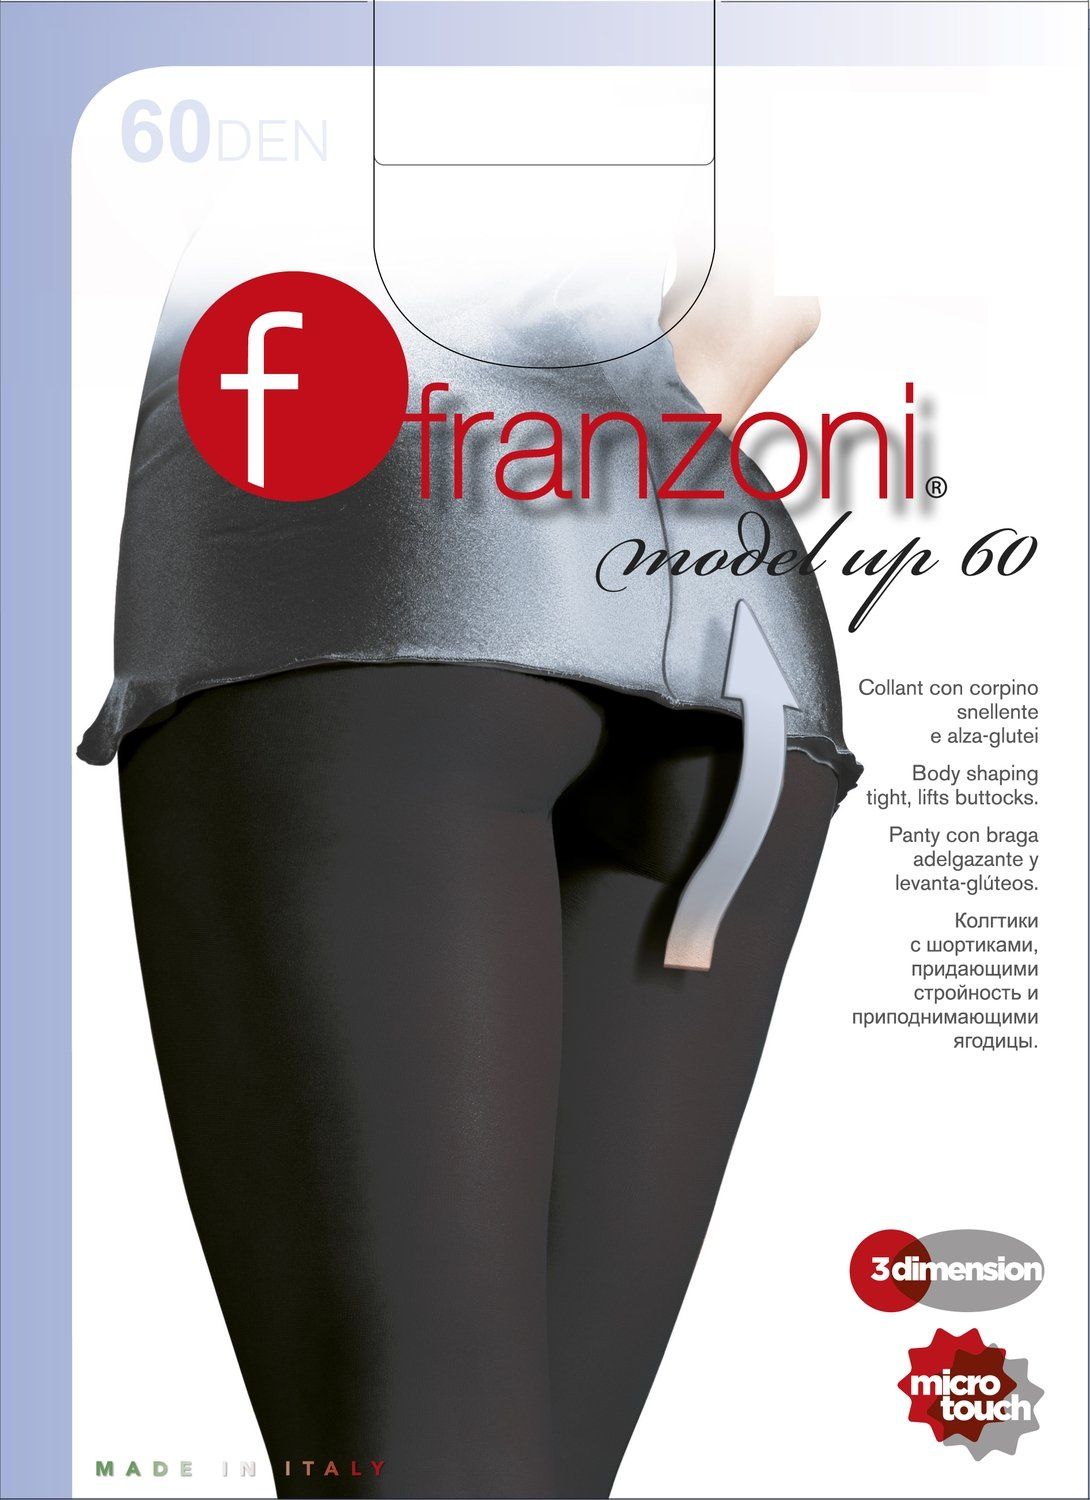  Franzoni Model-Up 60--3 , 46 